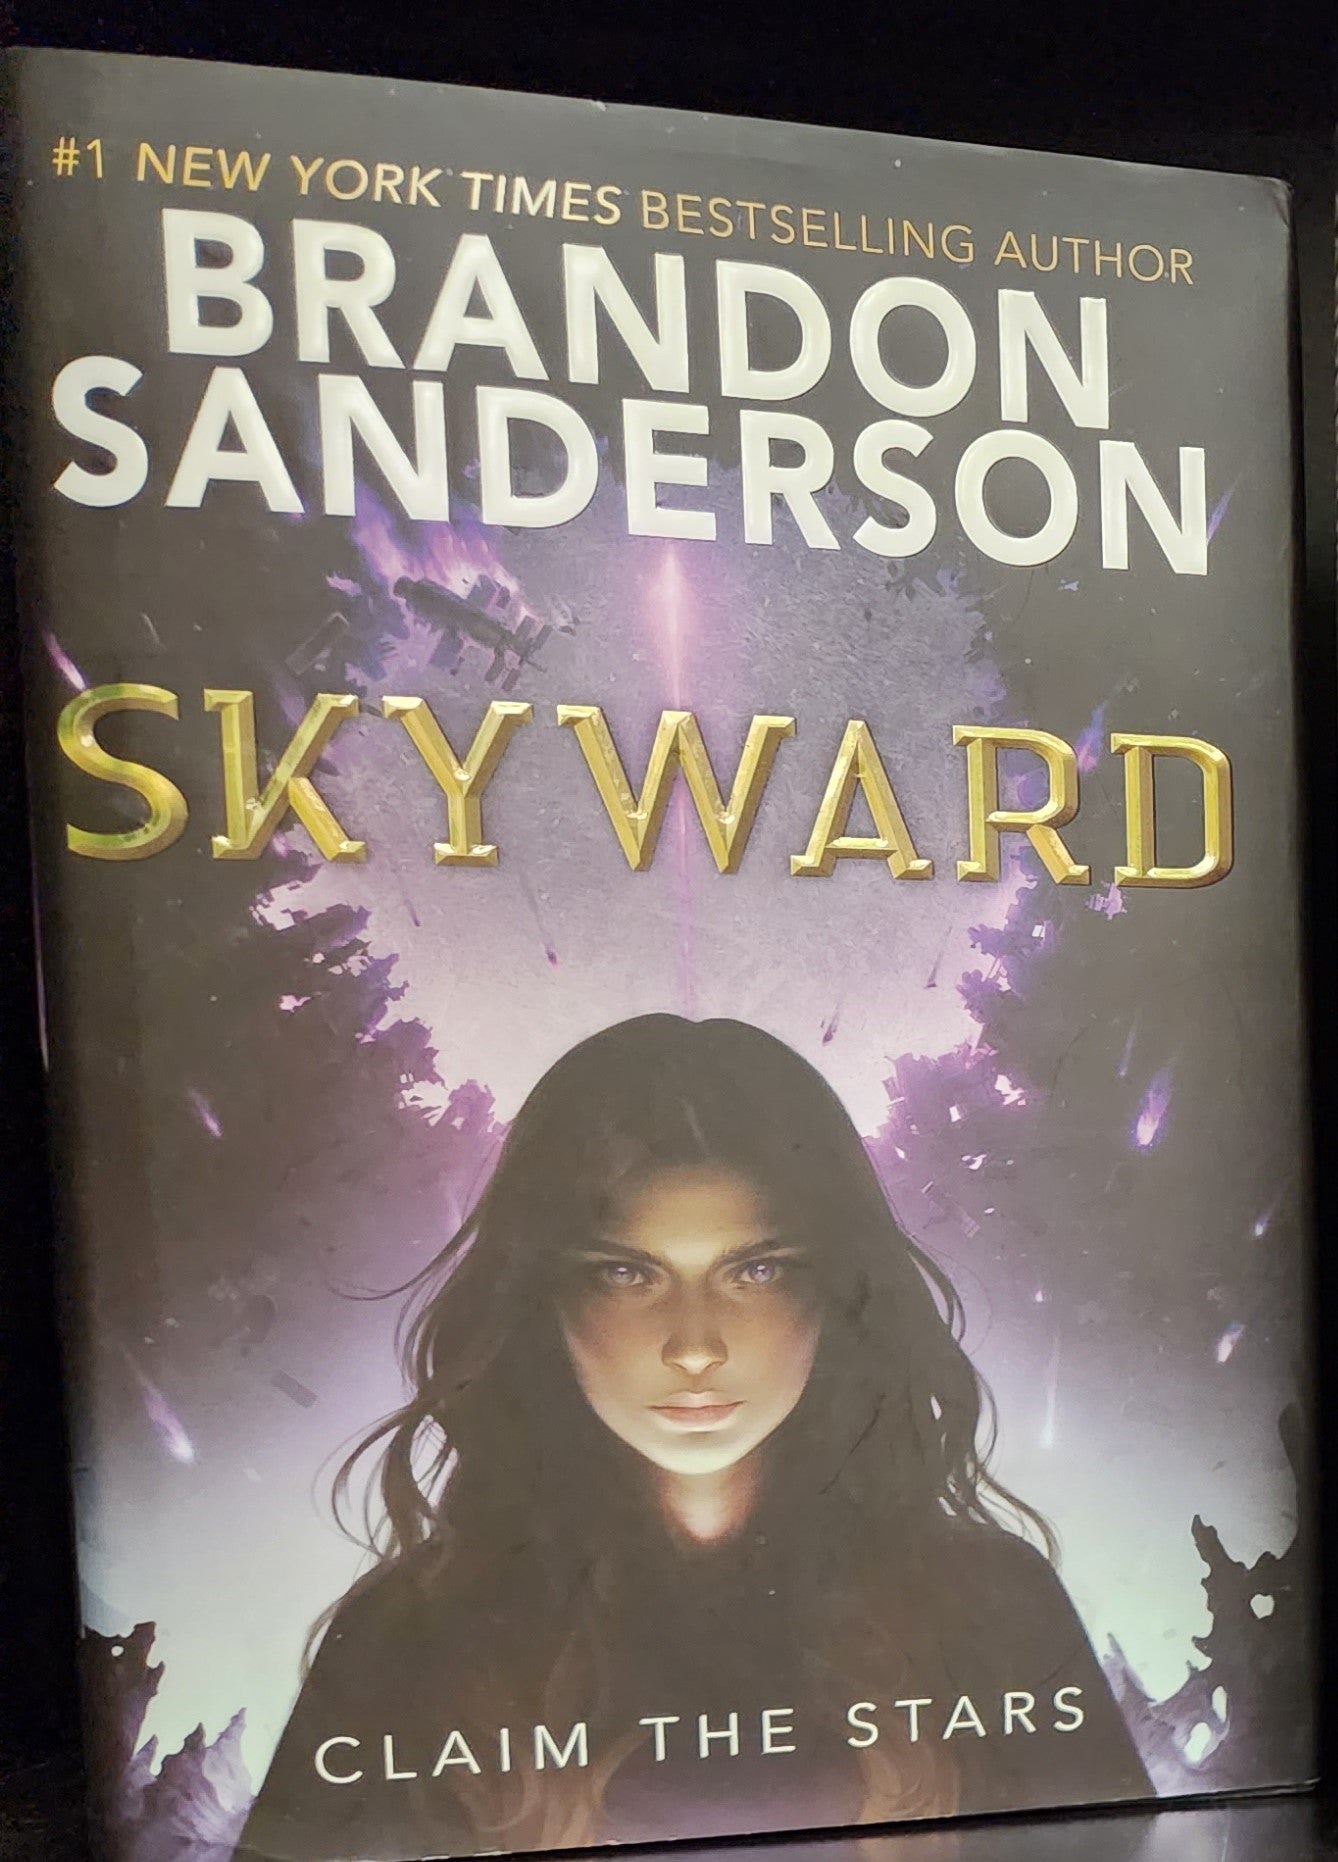 "Skyward" by Brandon Sanderson (very good condition)